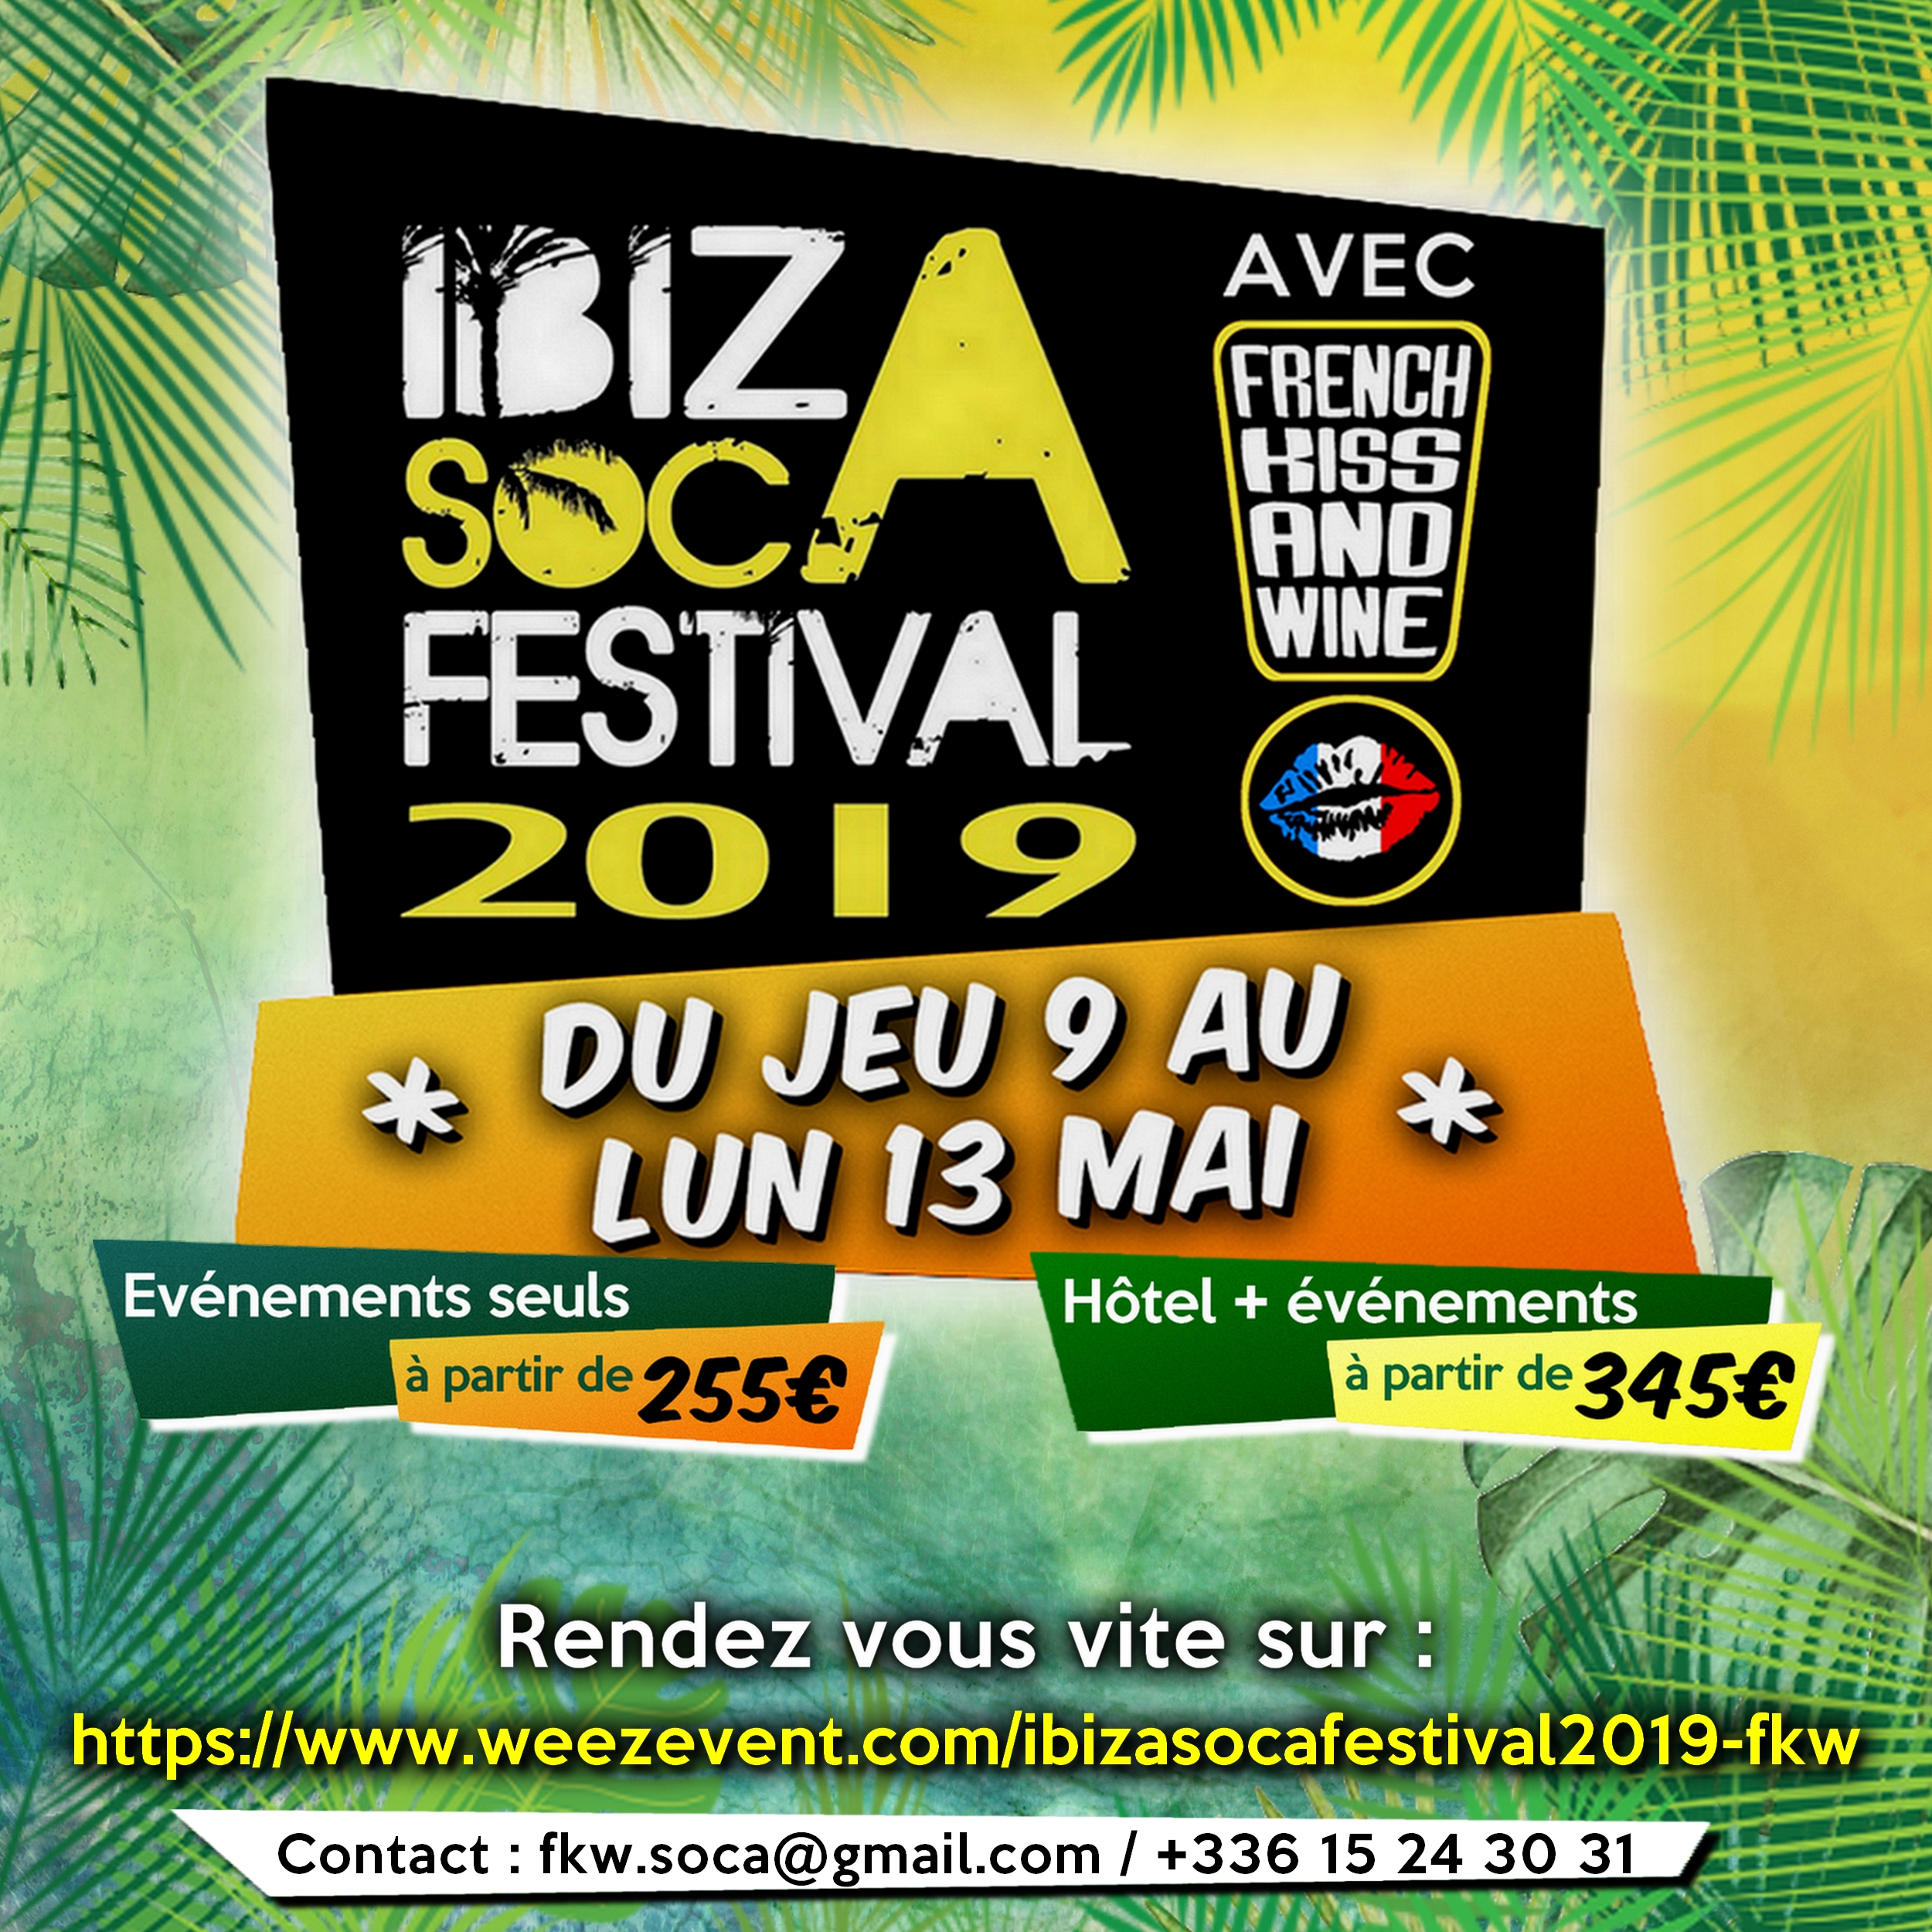 Ibiza Soca Festival 2019 avec French Kiss and Wine